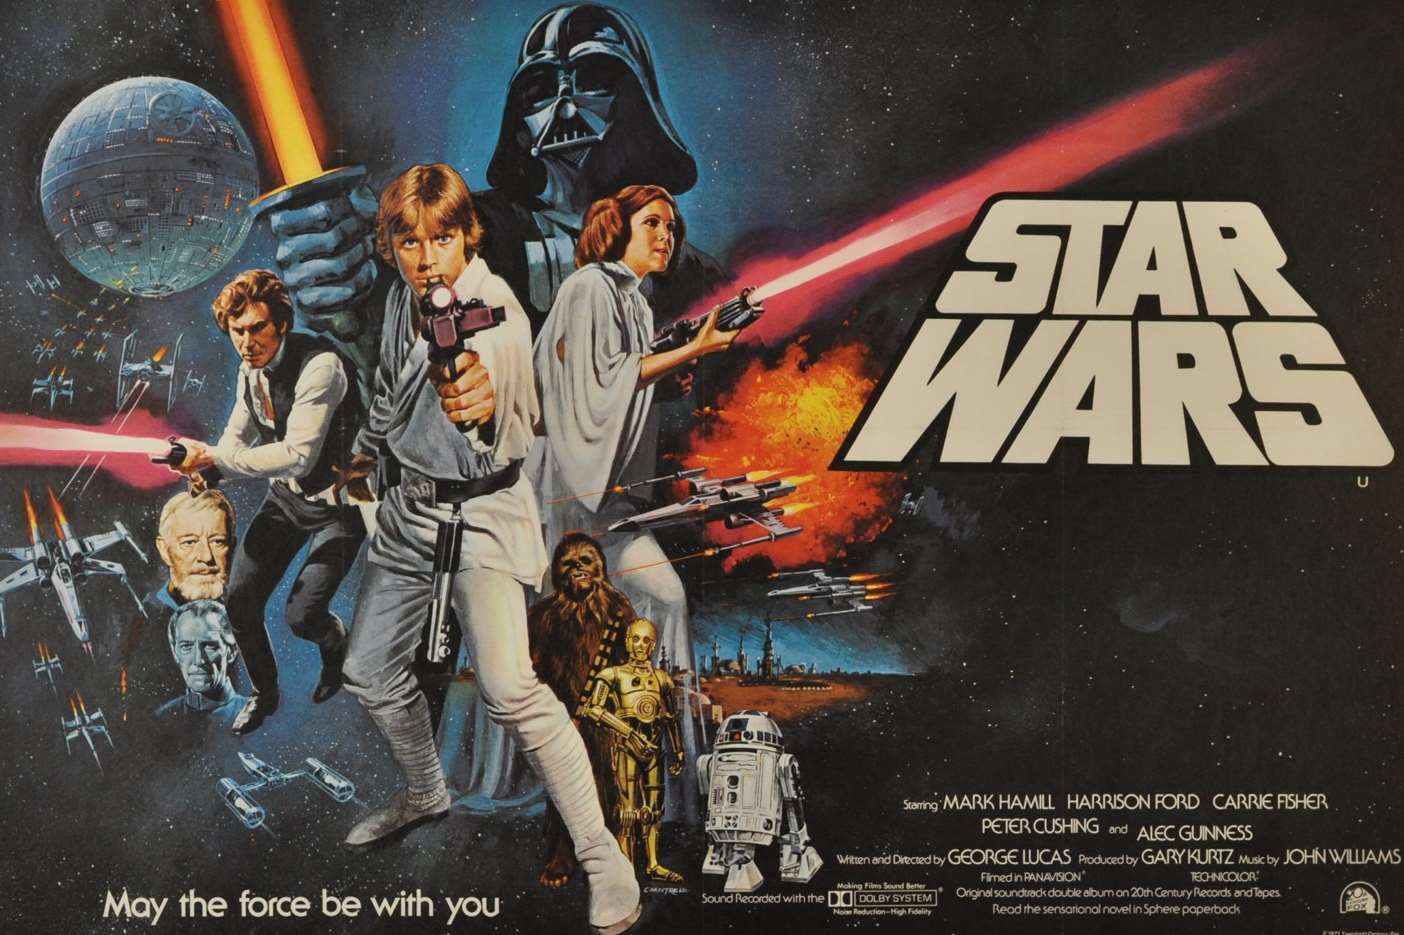 Tom Chantrell's take on the original Star Wars movie poster